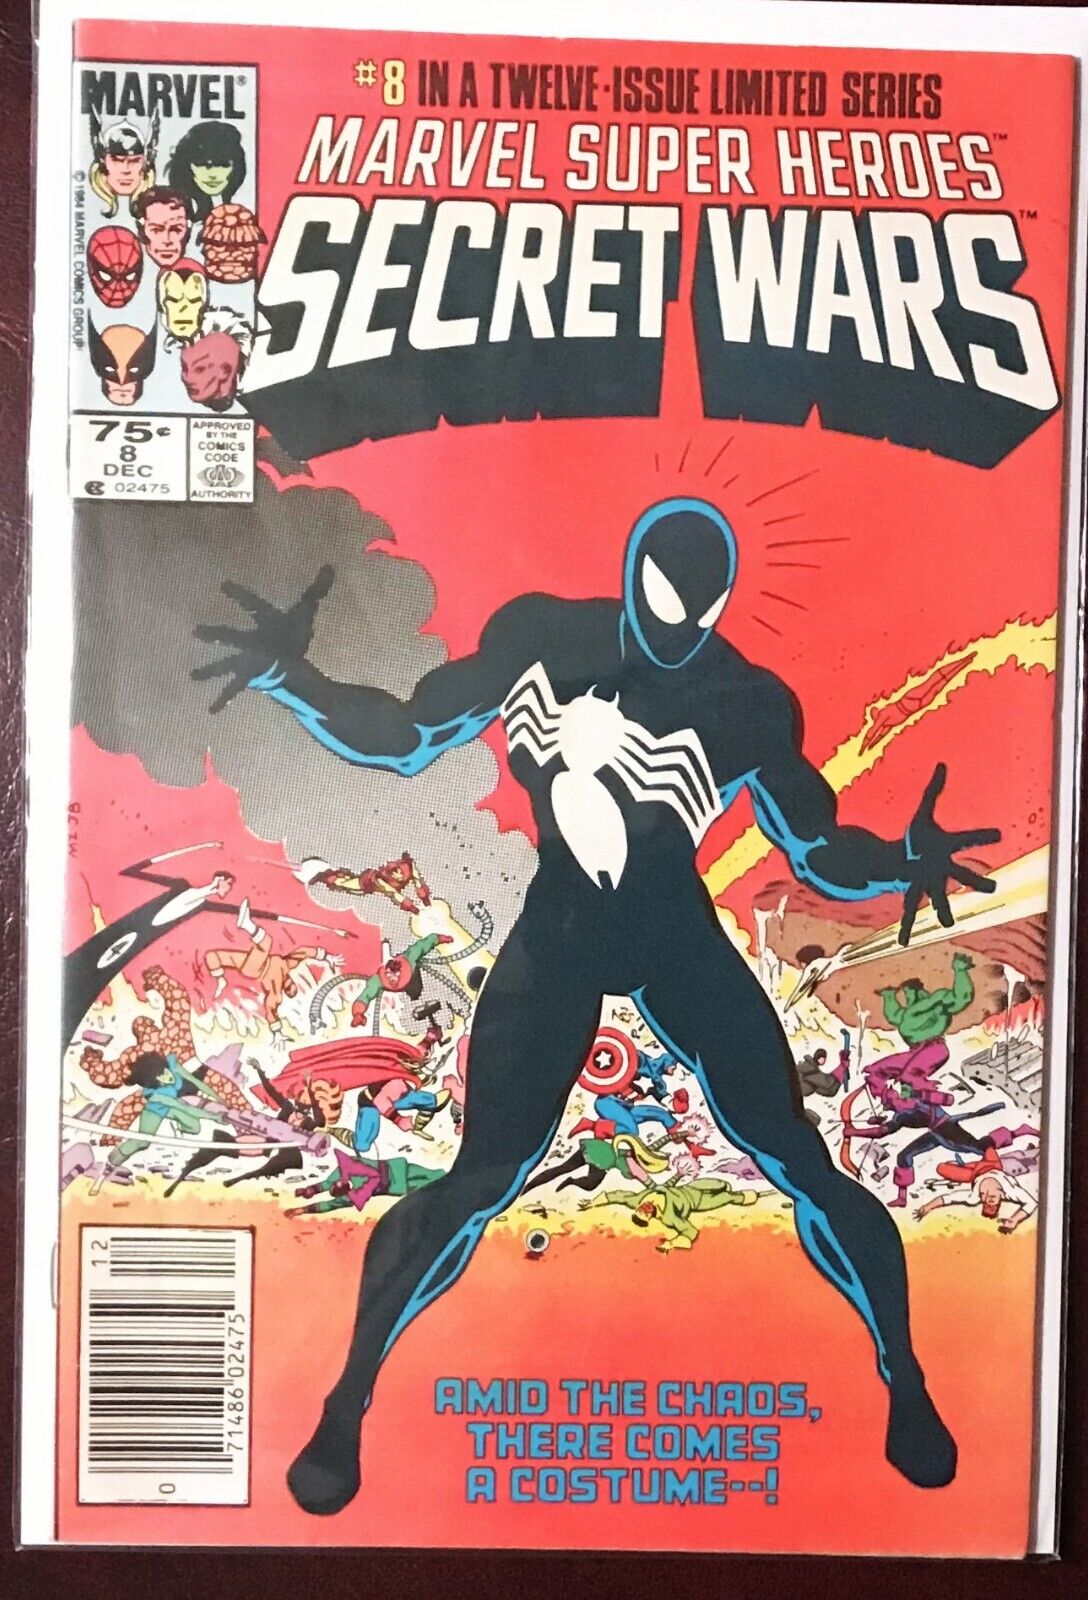 Marvel Comic Book Secret Wars #8 Newsstand - Great condition.